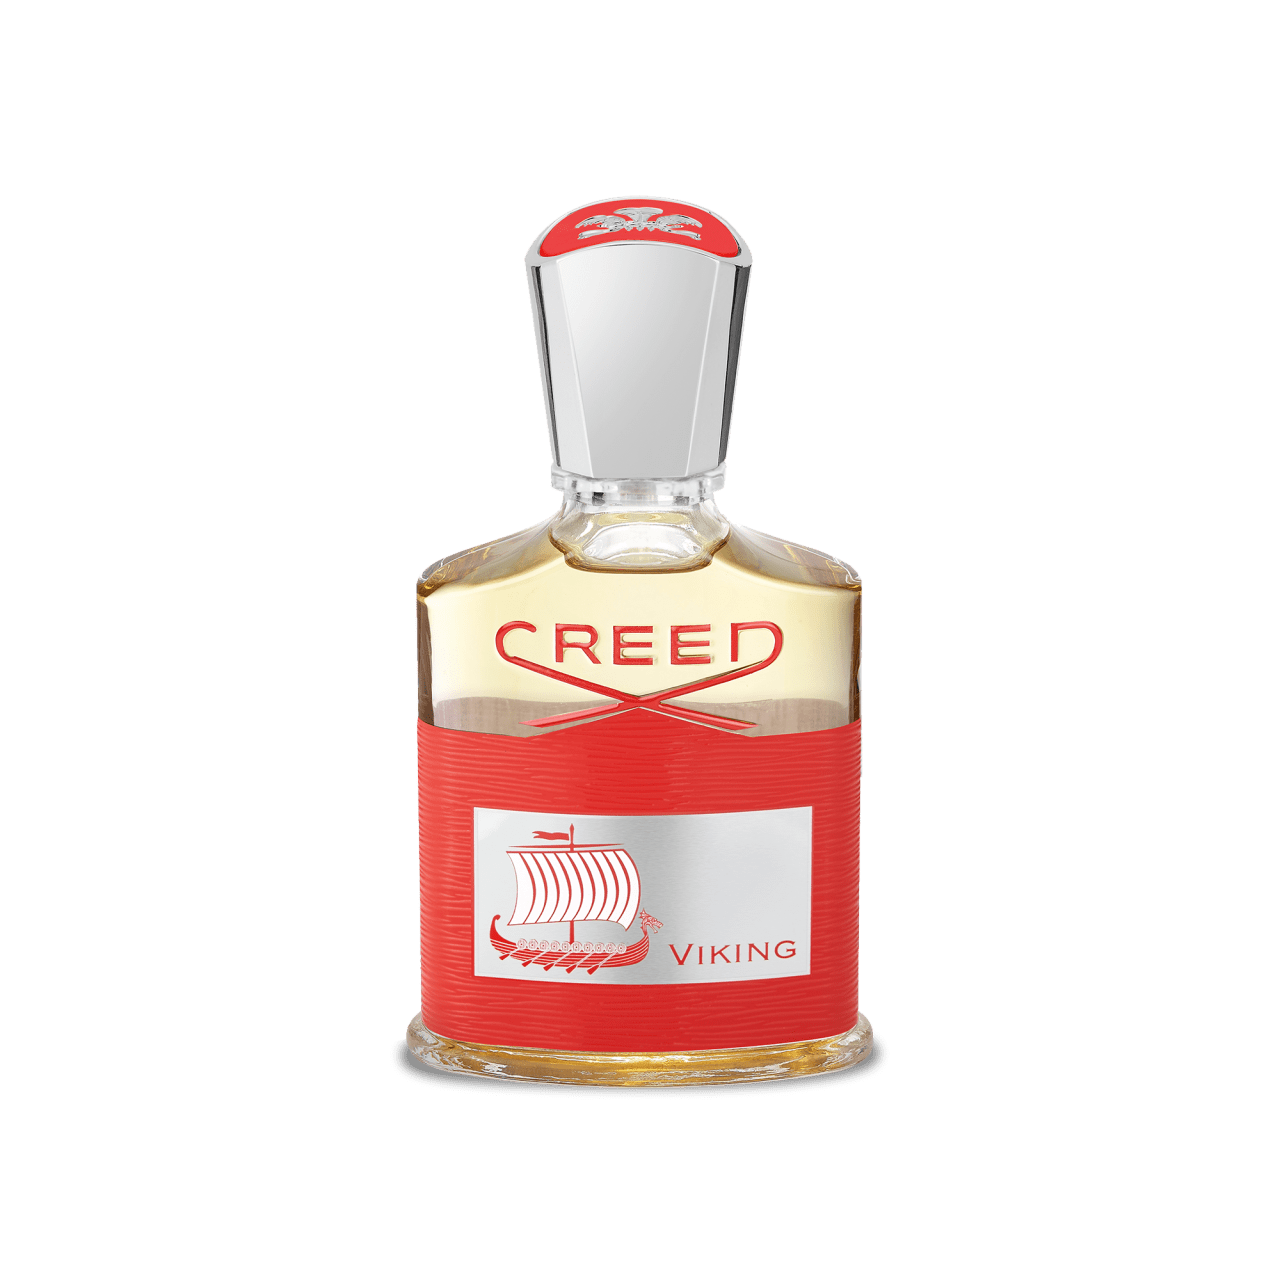  CREED VIKING Creed Perfumarie